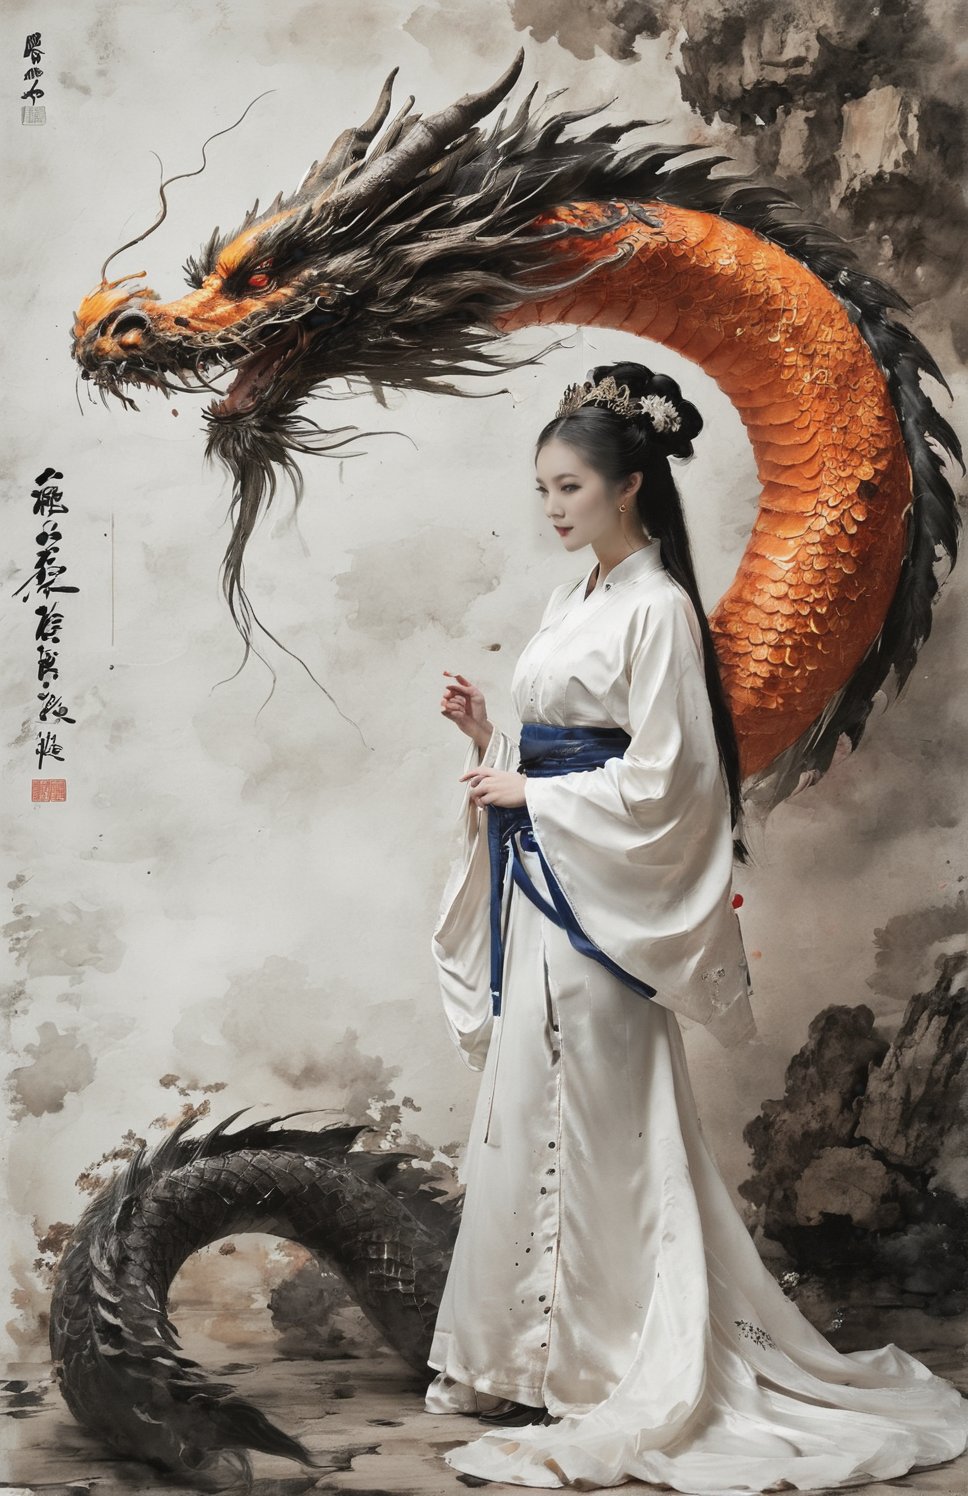 Chinese-style costume, orange costume, holding a folding fan, female boss, long hair, chinese dragon,